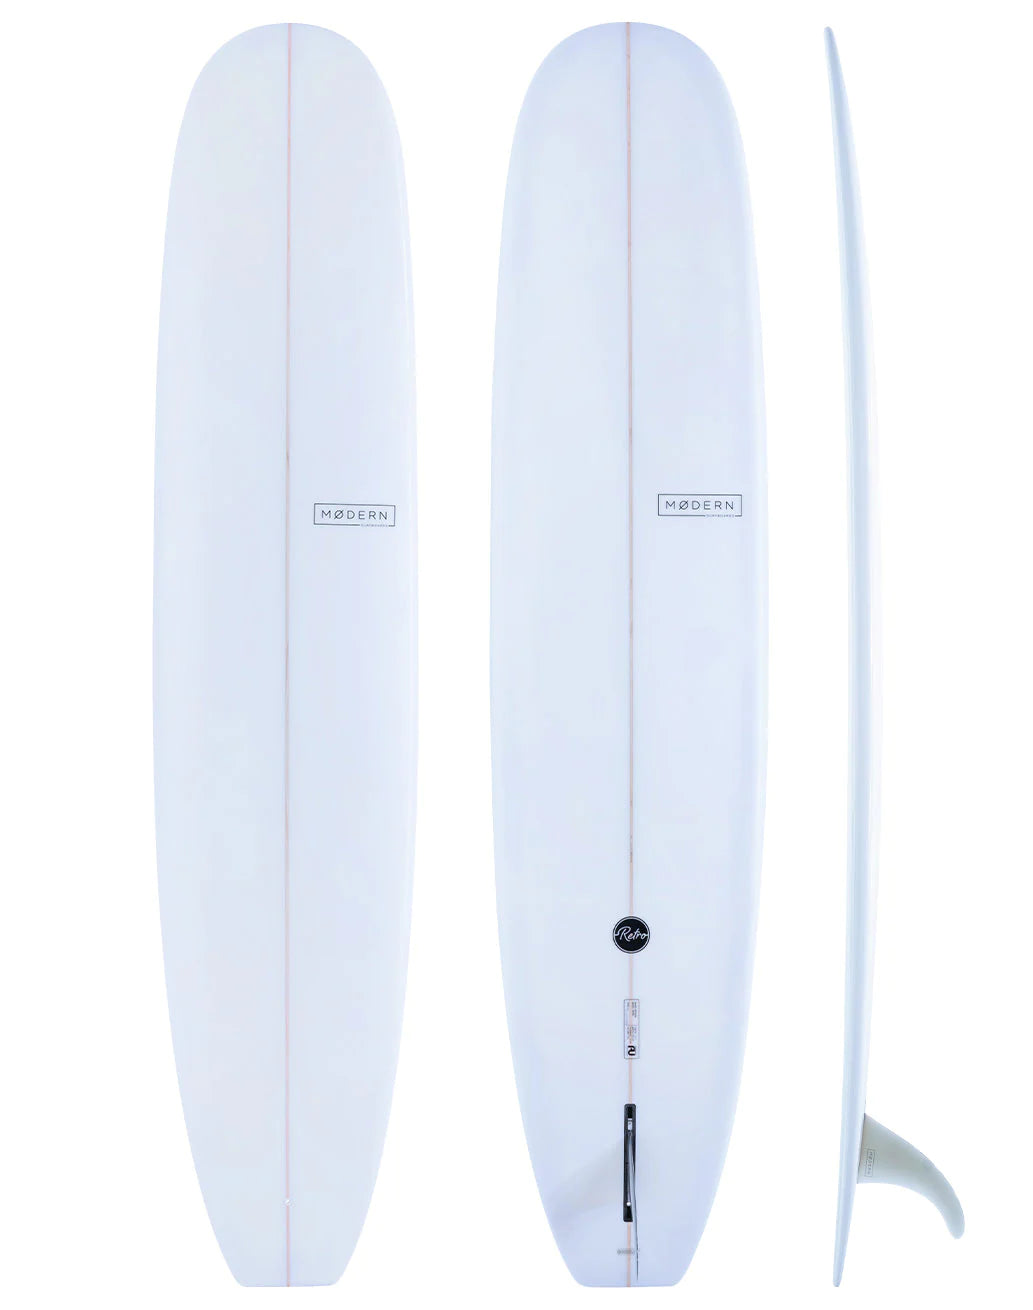 MODERN RETRO 9'1" SURFBOARD